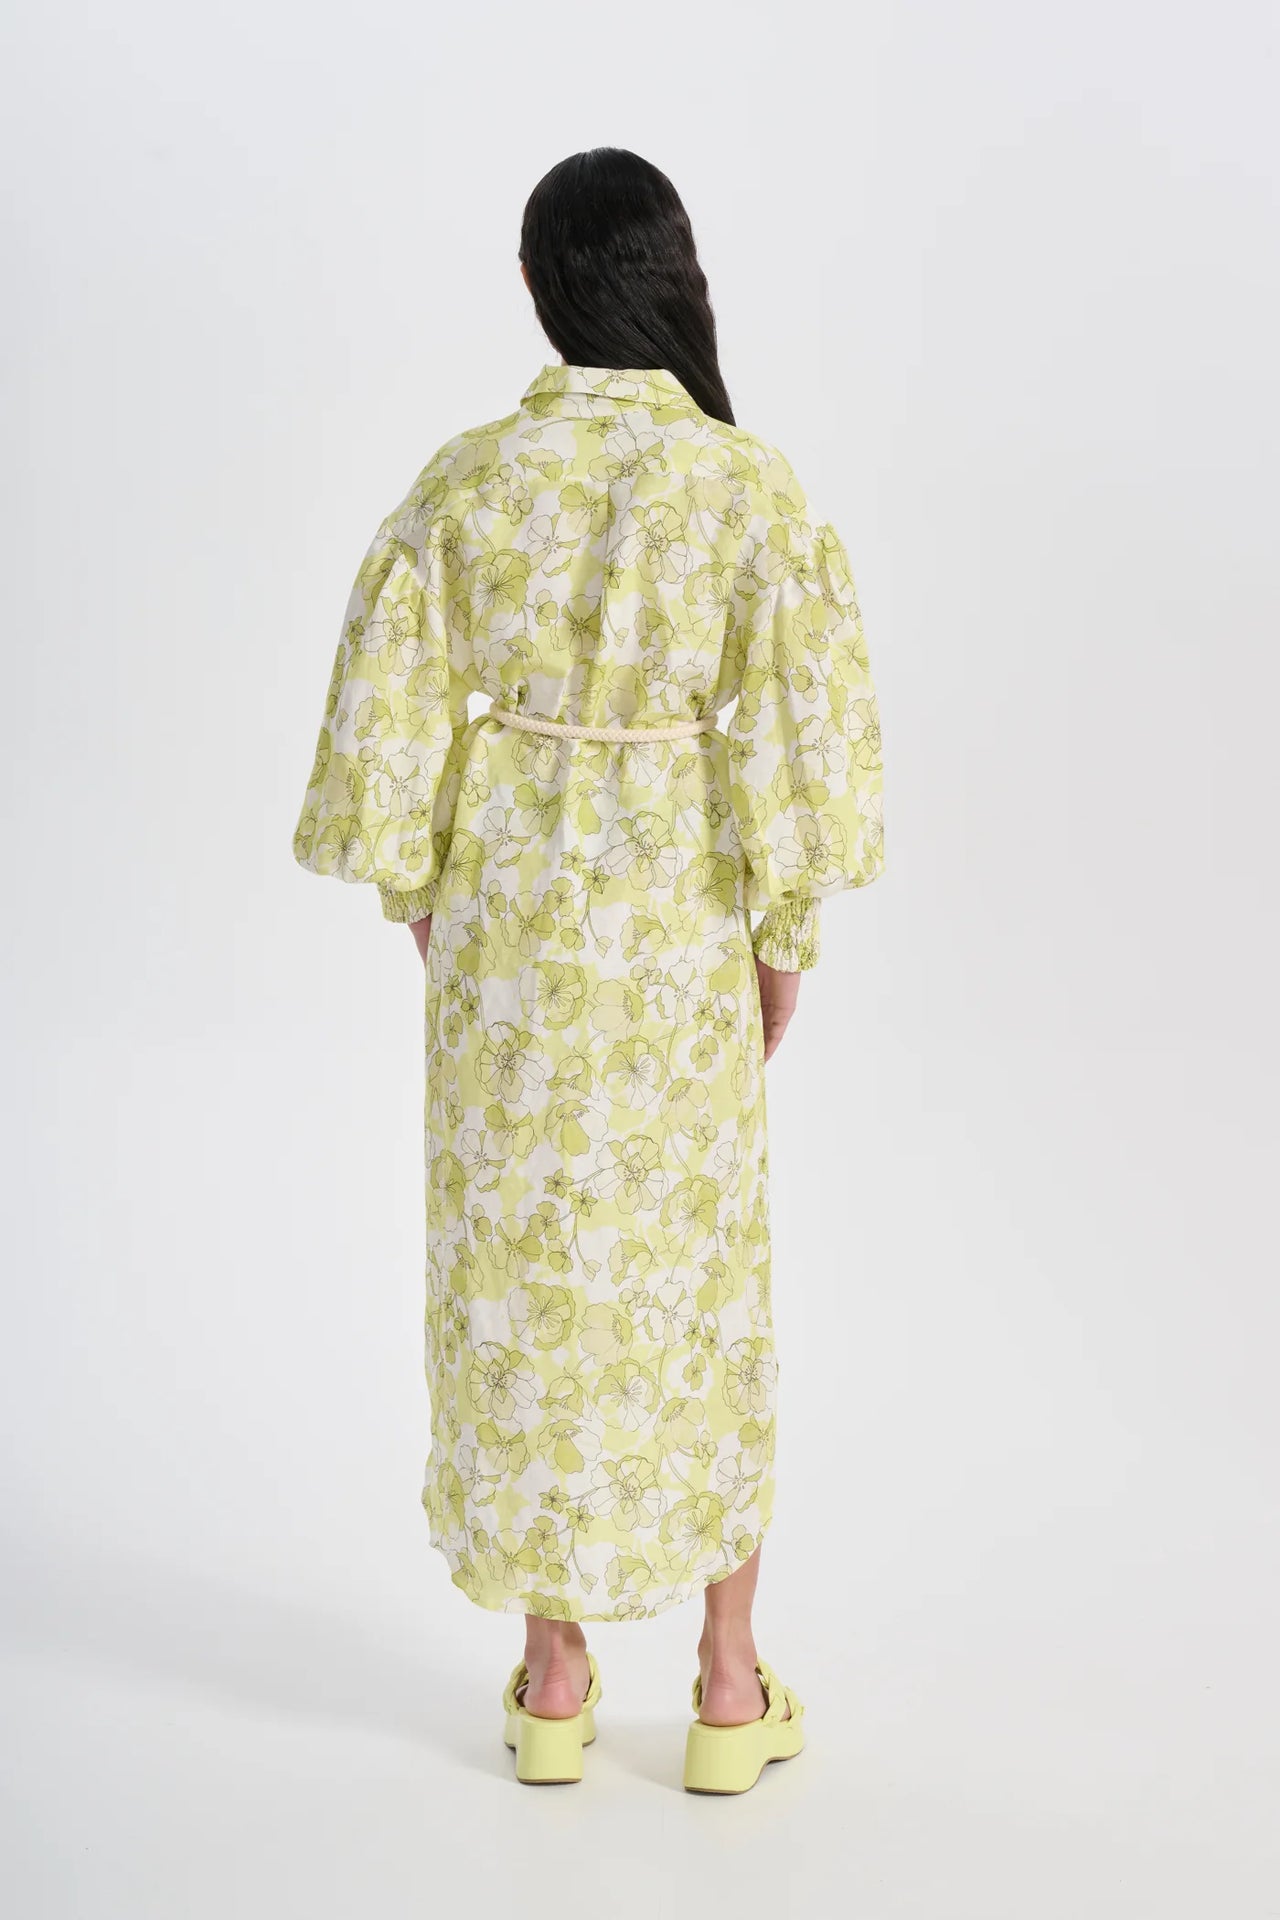 Samira Shirt Dress Neon Green Floral - STUDIO JO STORE